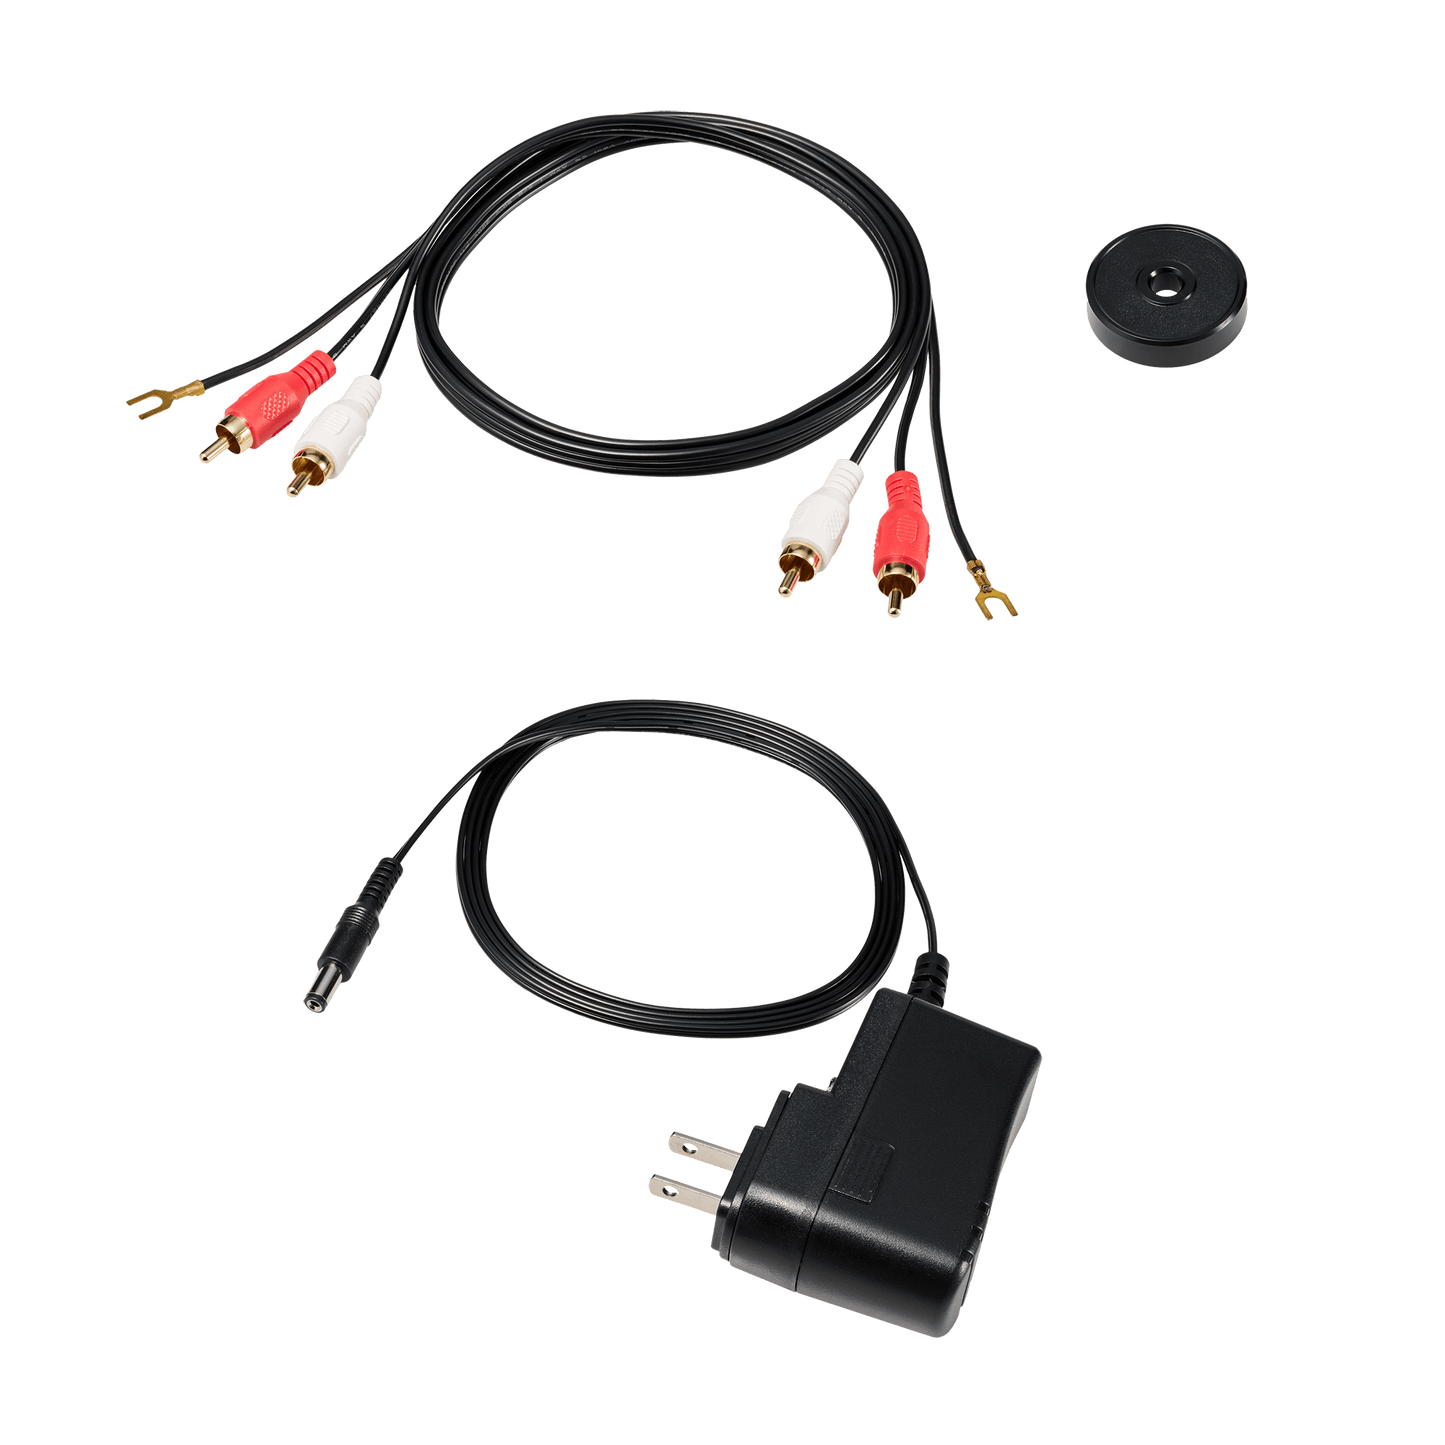 Audio-Technica AT-LPW50BTRW Manual Belt-Drive Turntable (Wireless & Analogue)